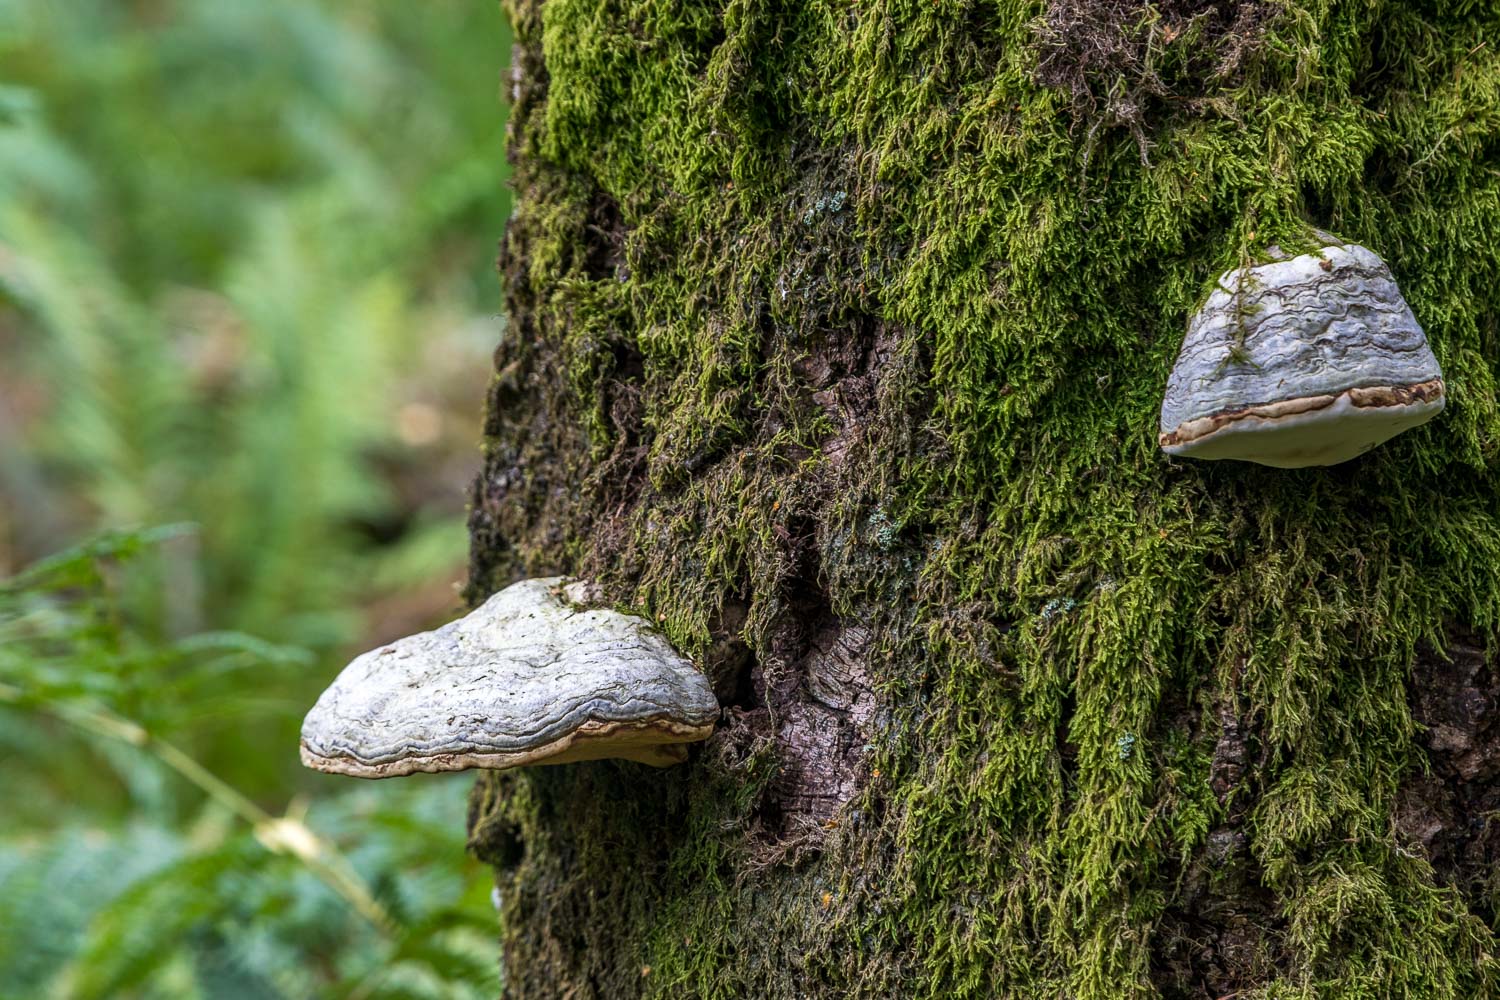 Borrowdale mushrooms